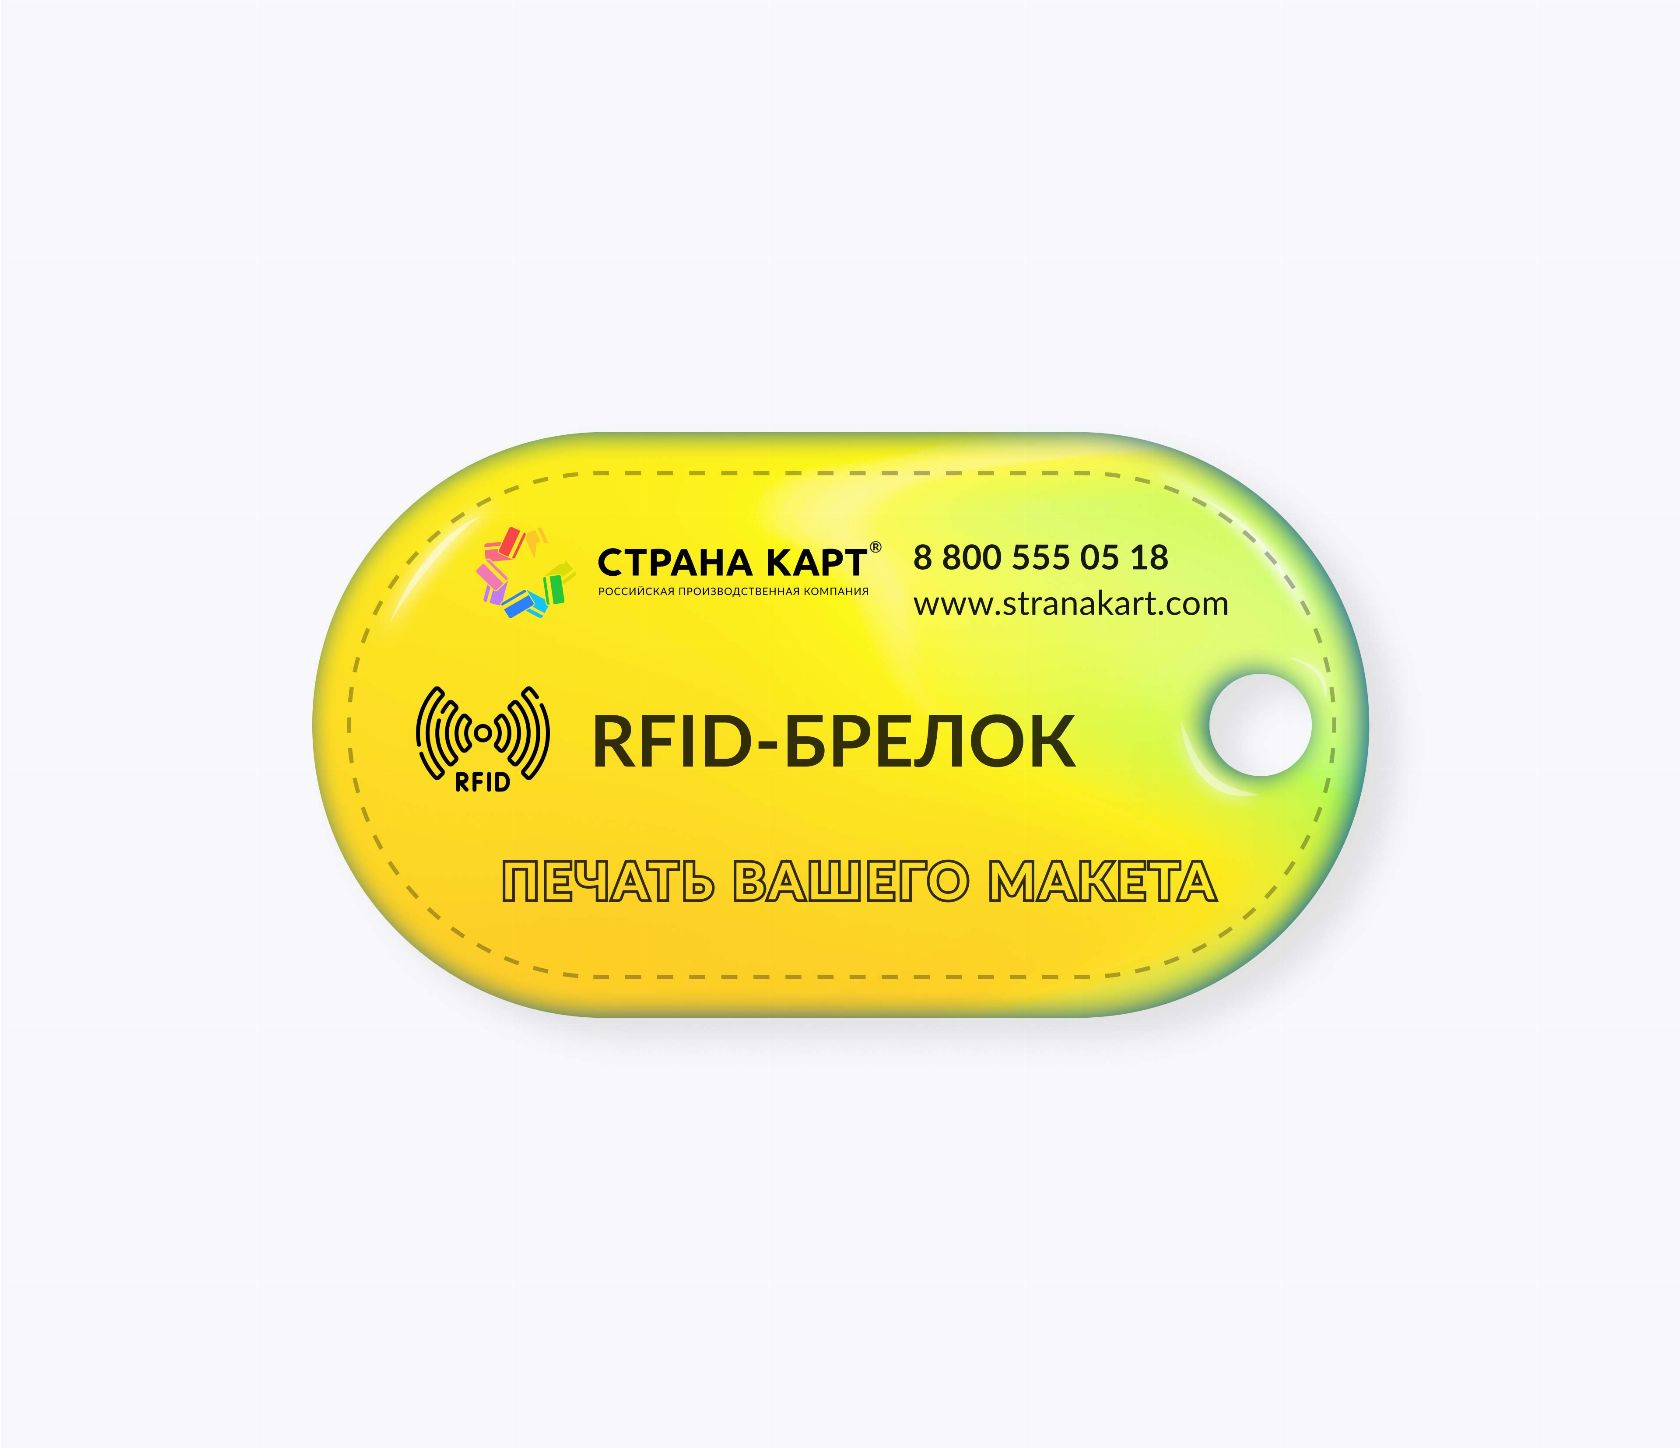 Овальные RFID-брелоки NEOKEY® с чипом MIK1KMCM 7 byte UID RFID-брелоки NEOKEY® с чипом MIK1KMCM 7 byte UID и вашим логотипом